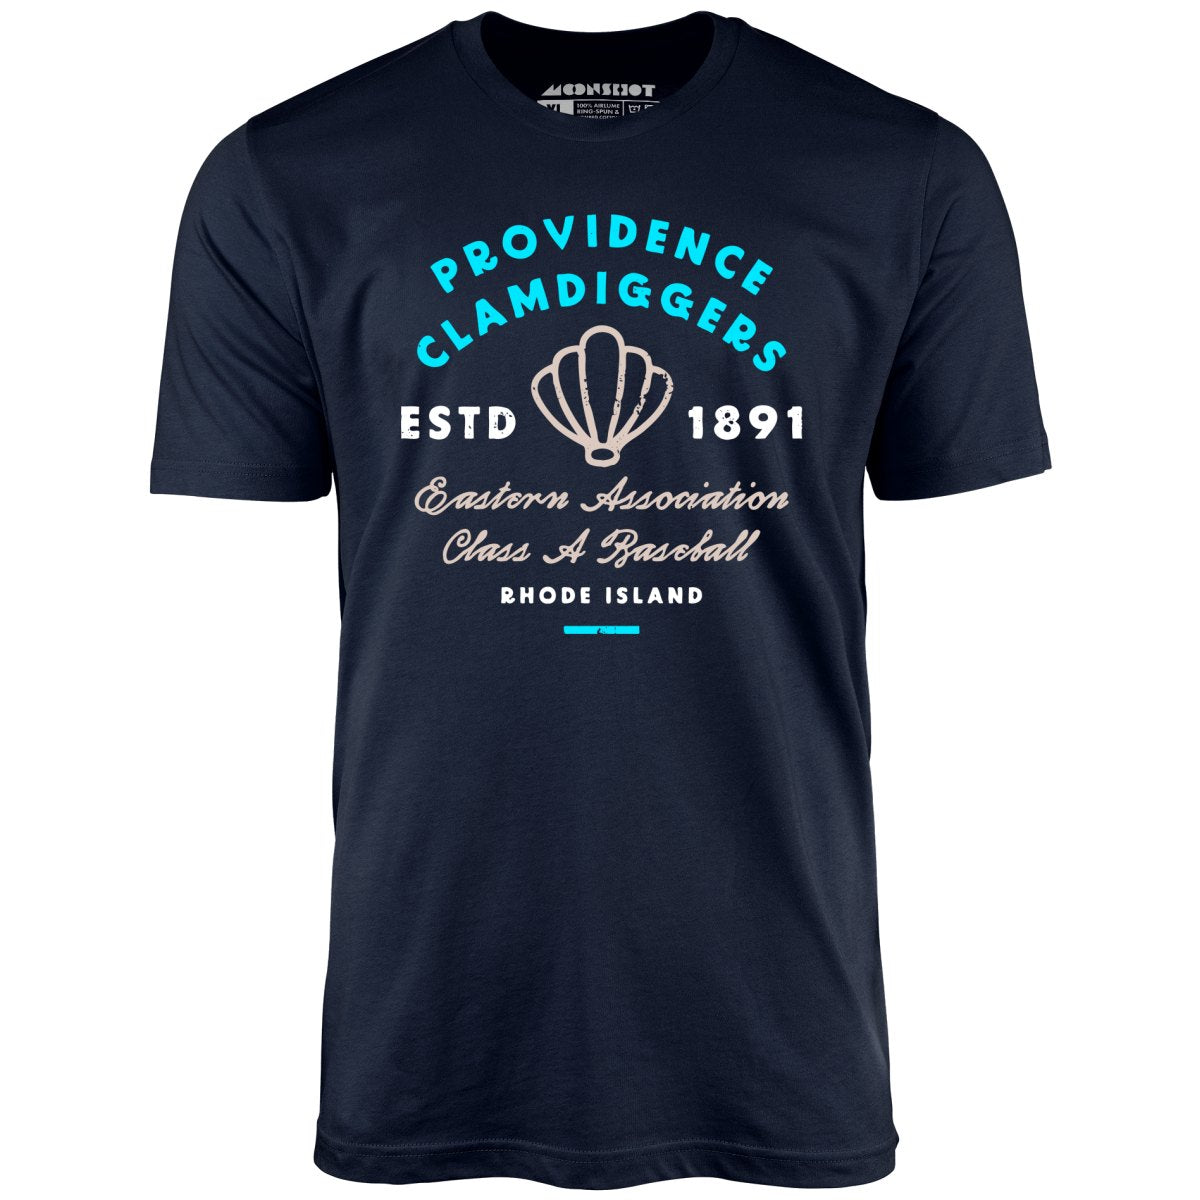 Providence Clamdiggers - Rhode Island - Vintage Defunct Baseball Teams - Unisex T-Shirt